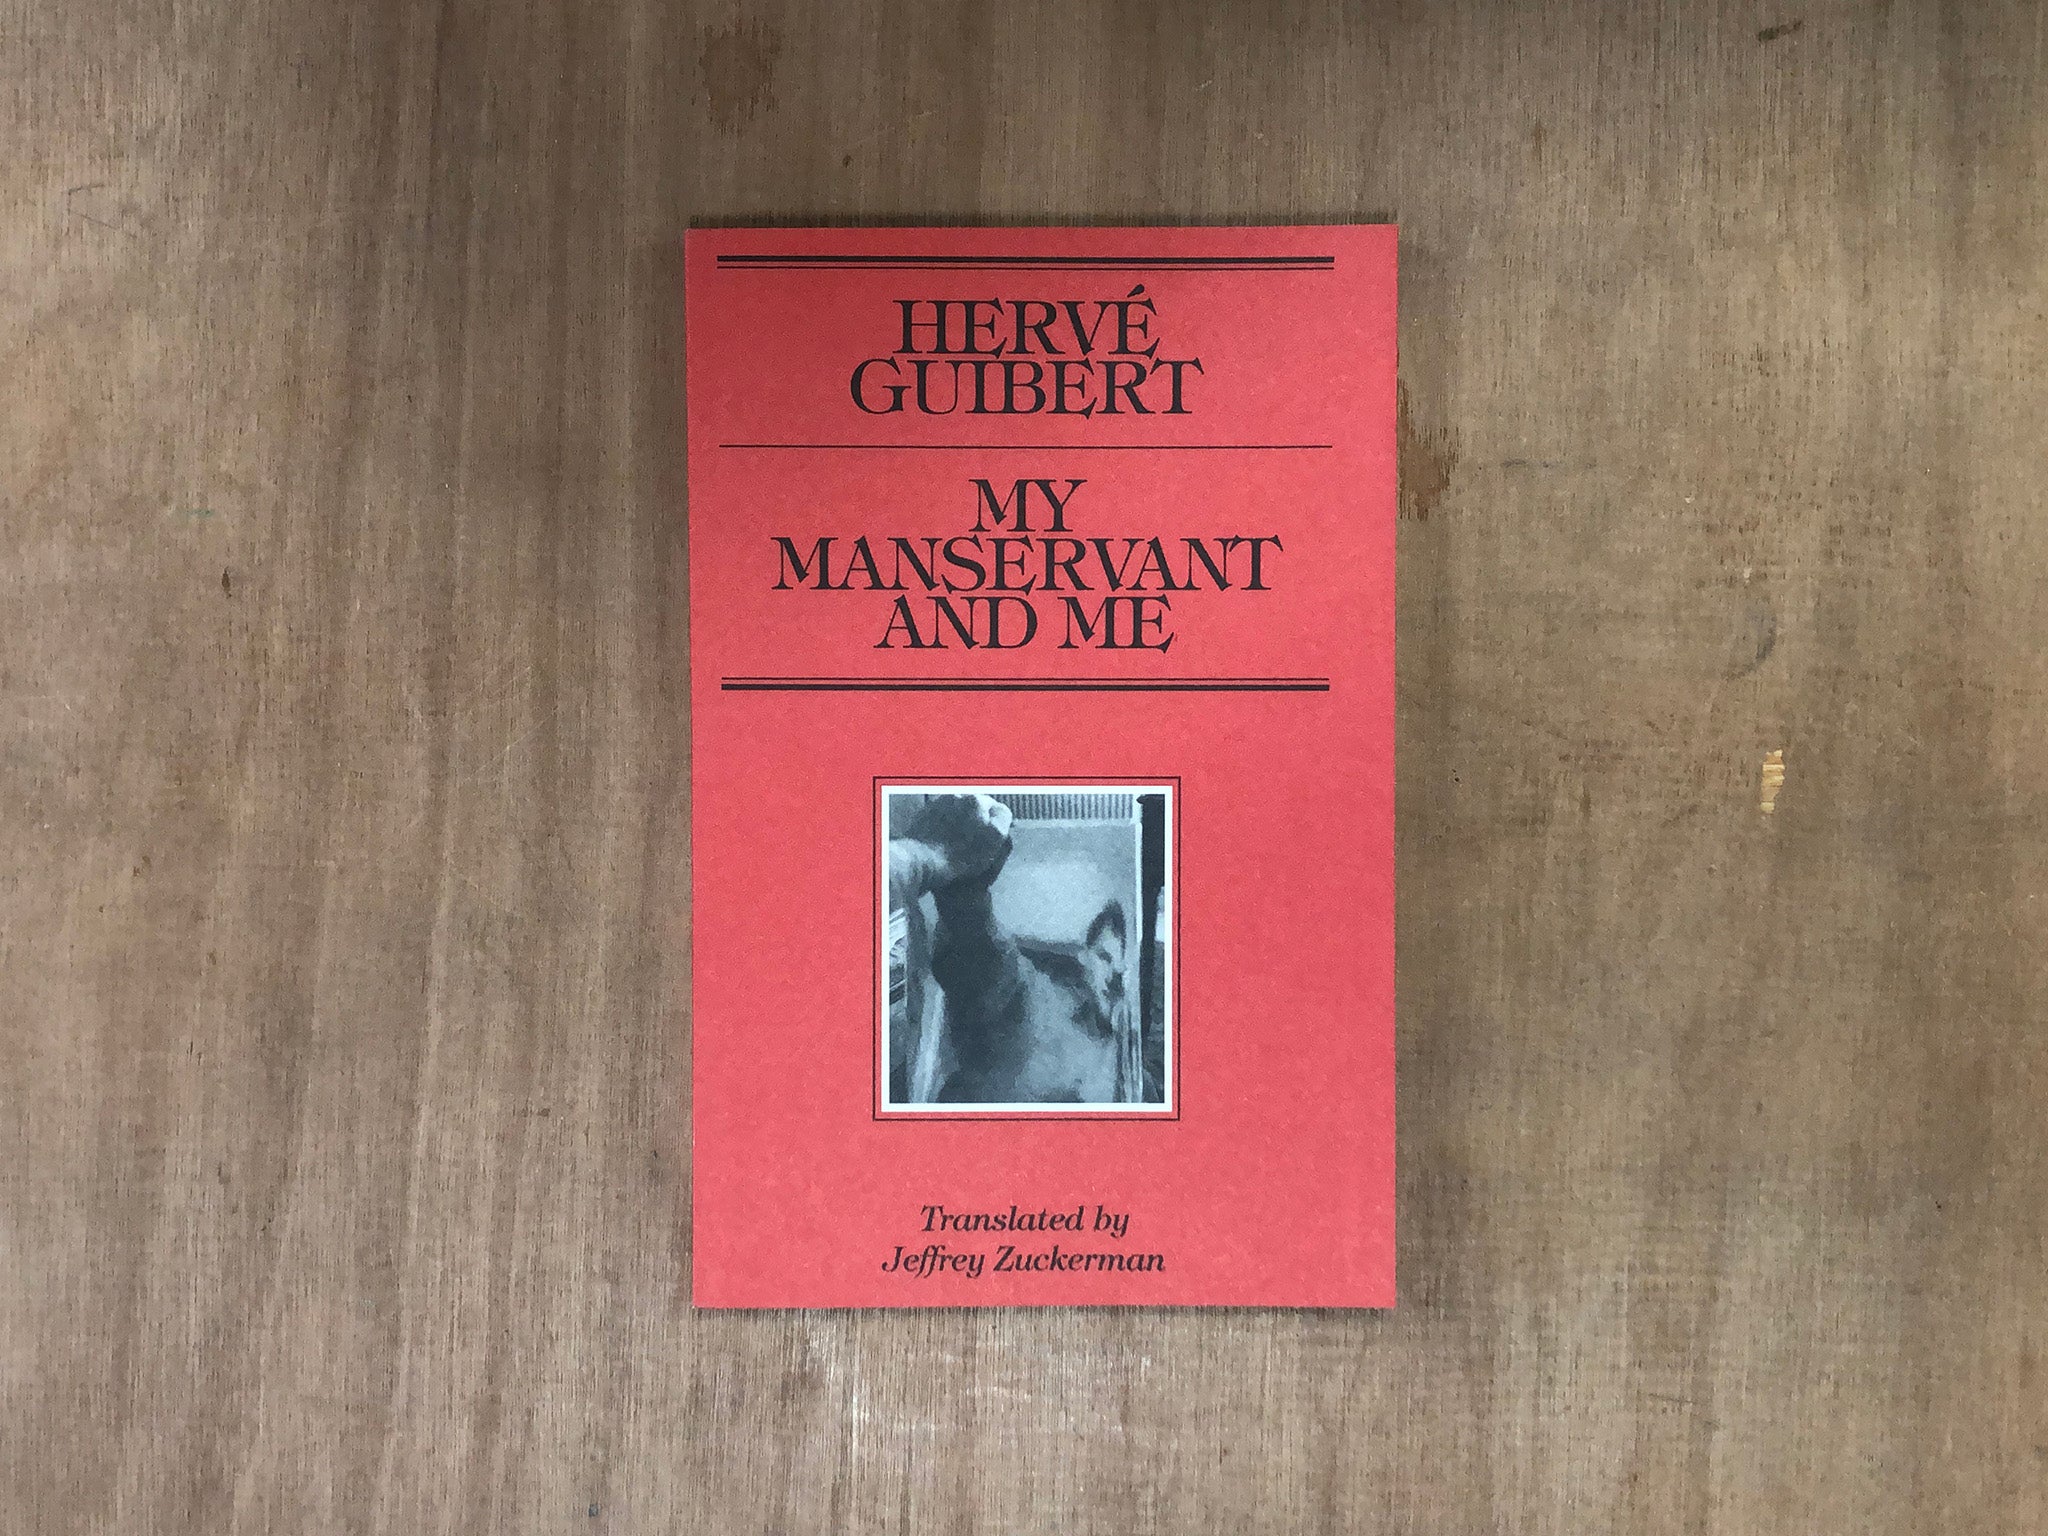 MY MANSERVANT AND ME by Herve Guibert. Translated by Jeffrey Zuckerman